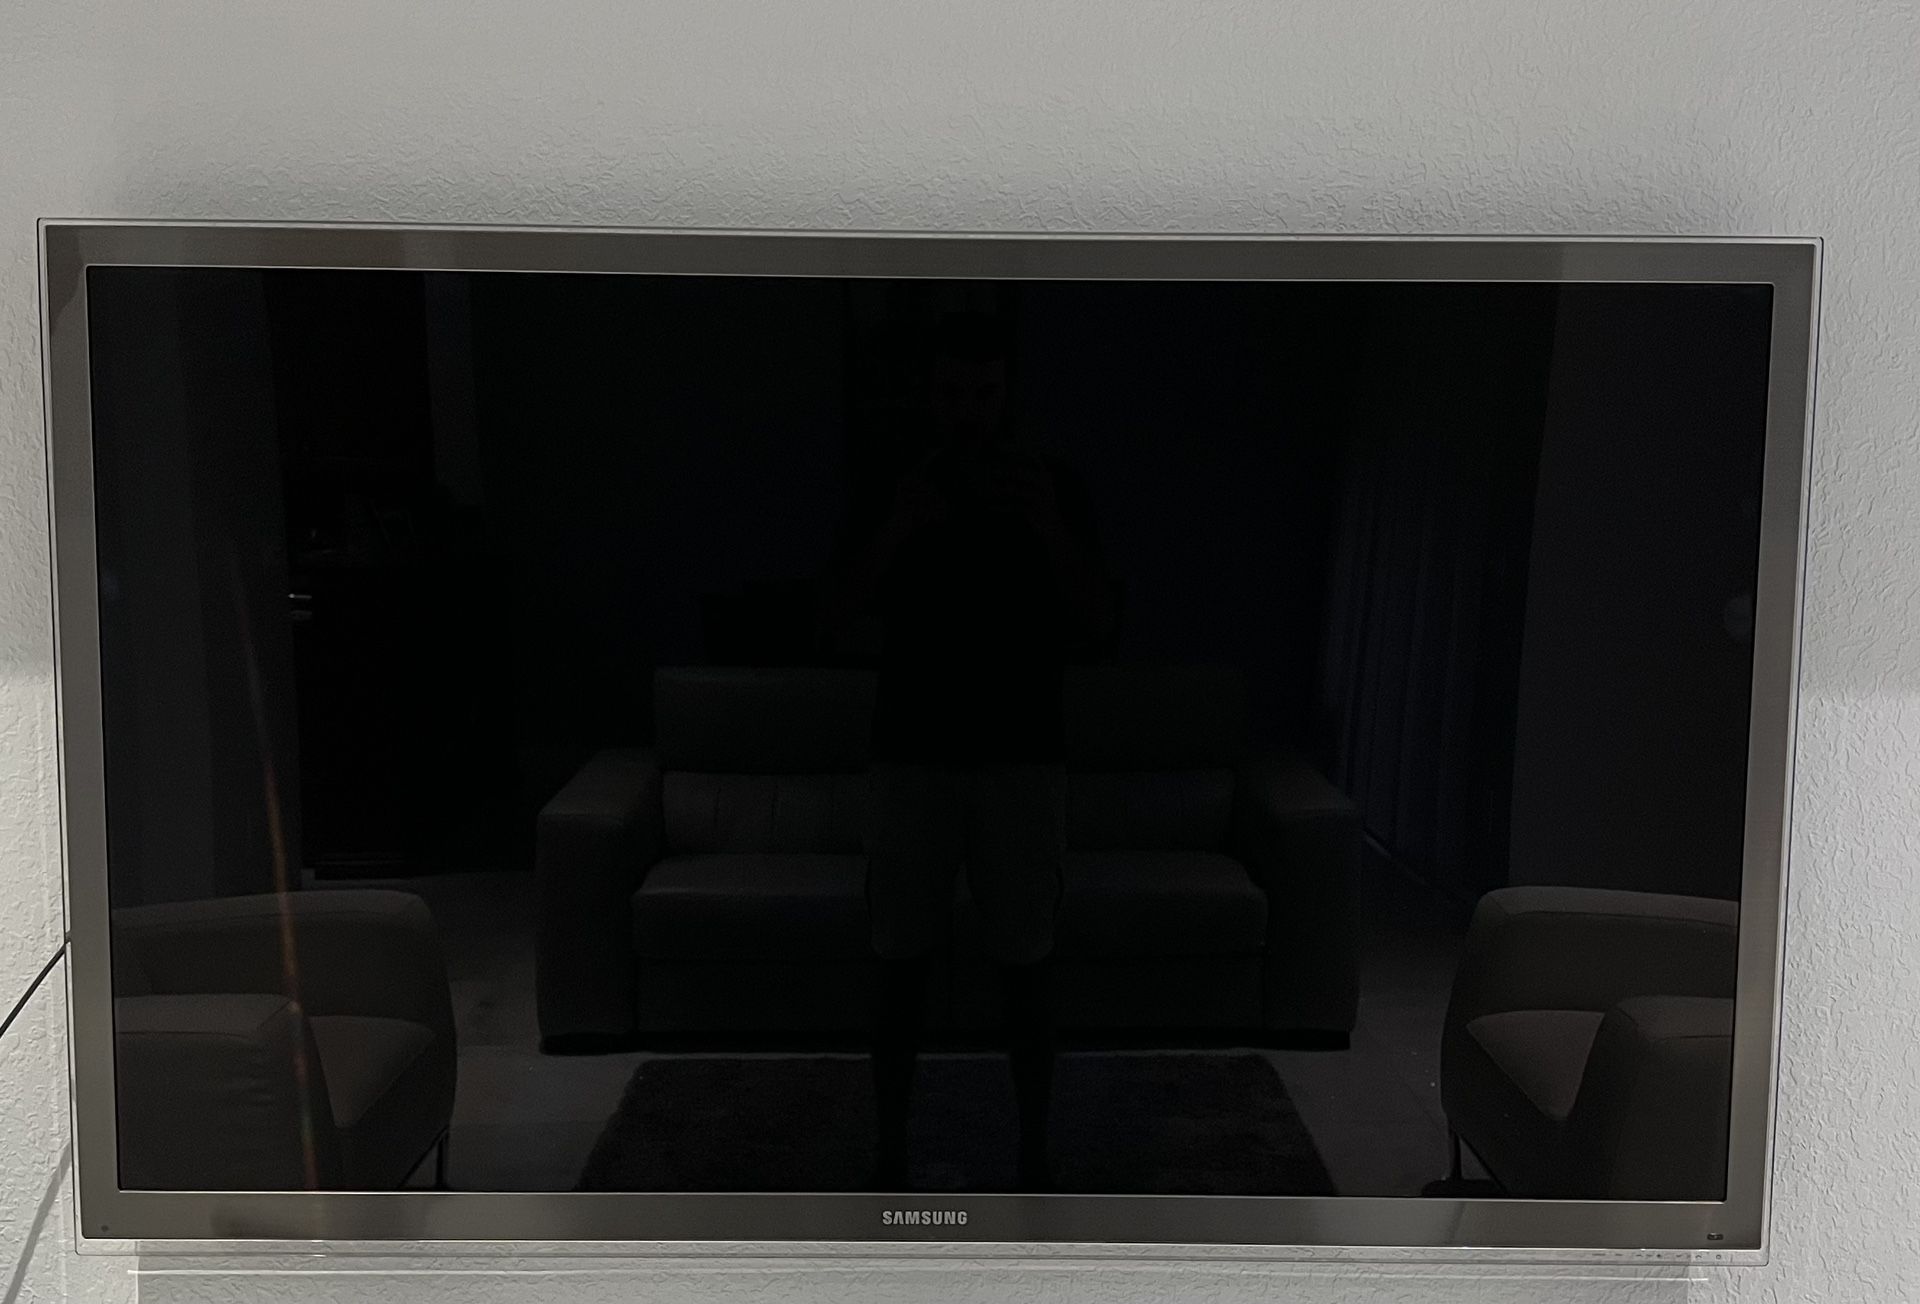 Samsung flat screen TV (2012)